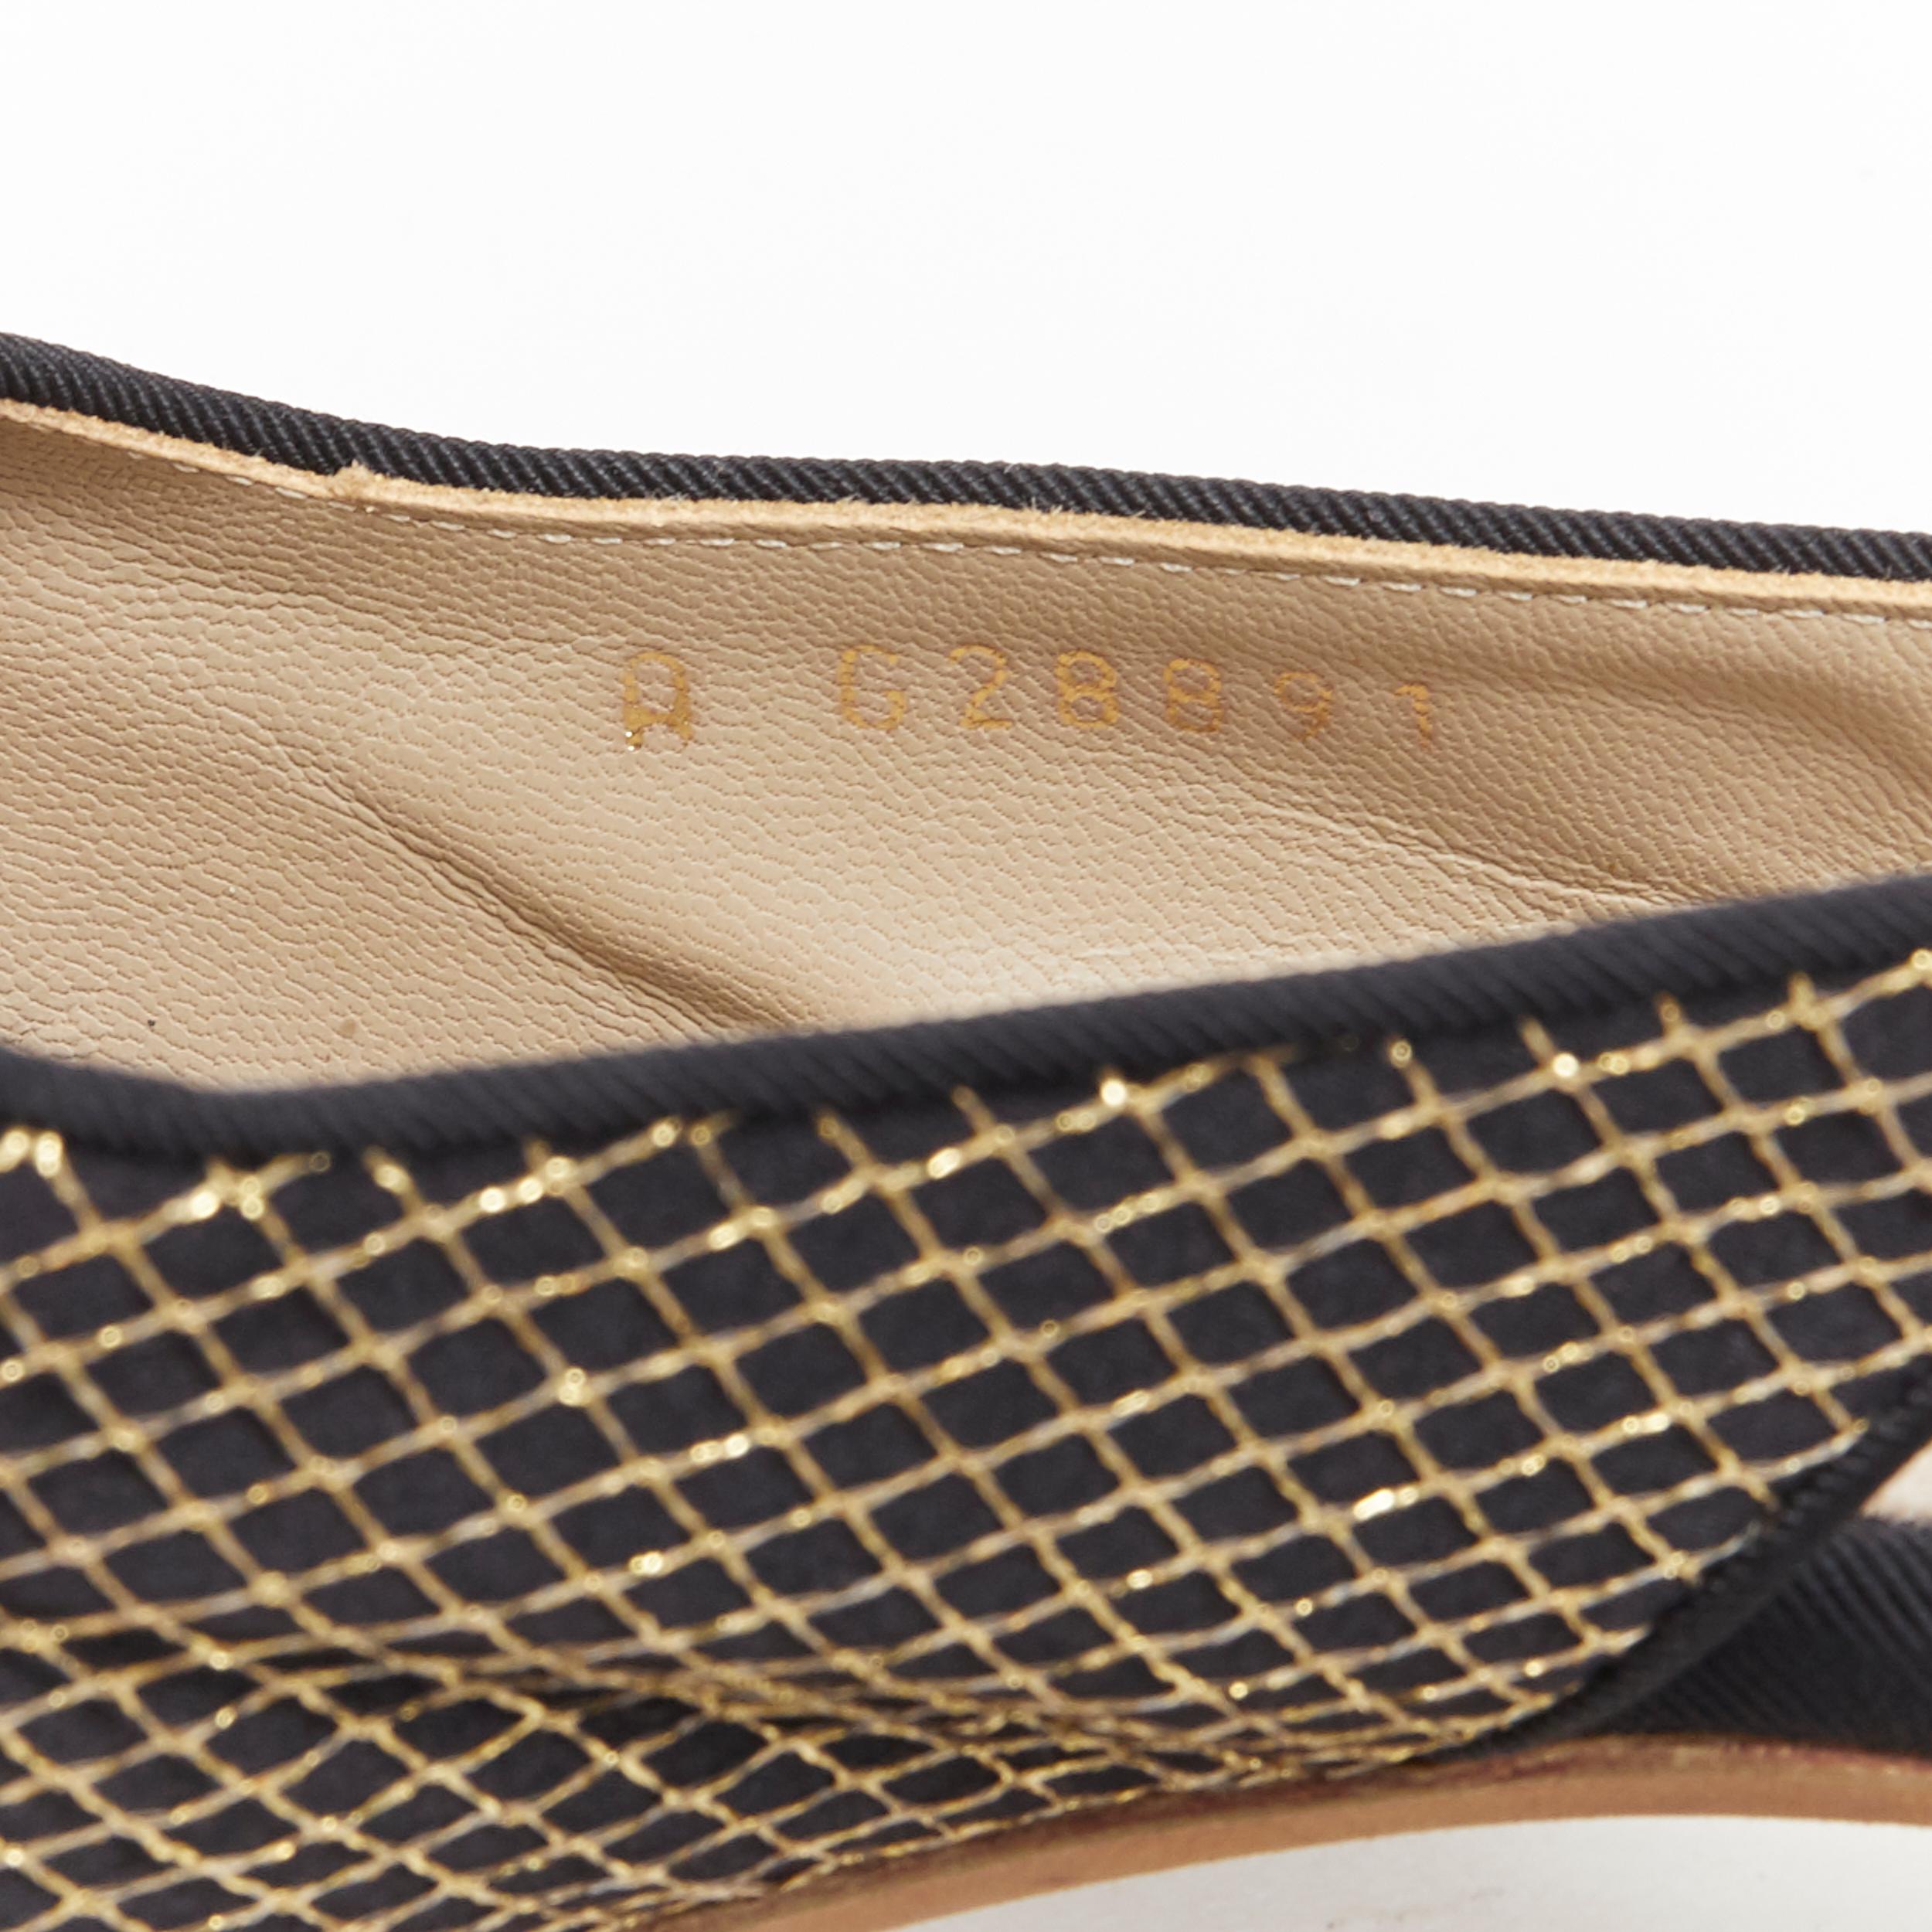 CHANEL metallic gold camellia CC diamond stitch gold chunky heel sling EU35.5 6